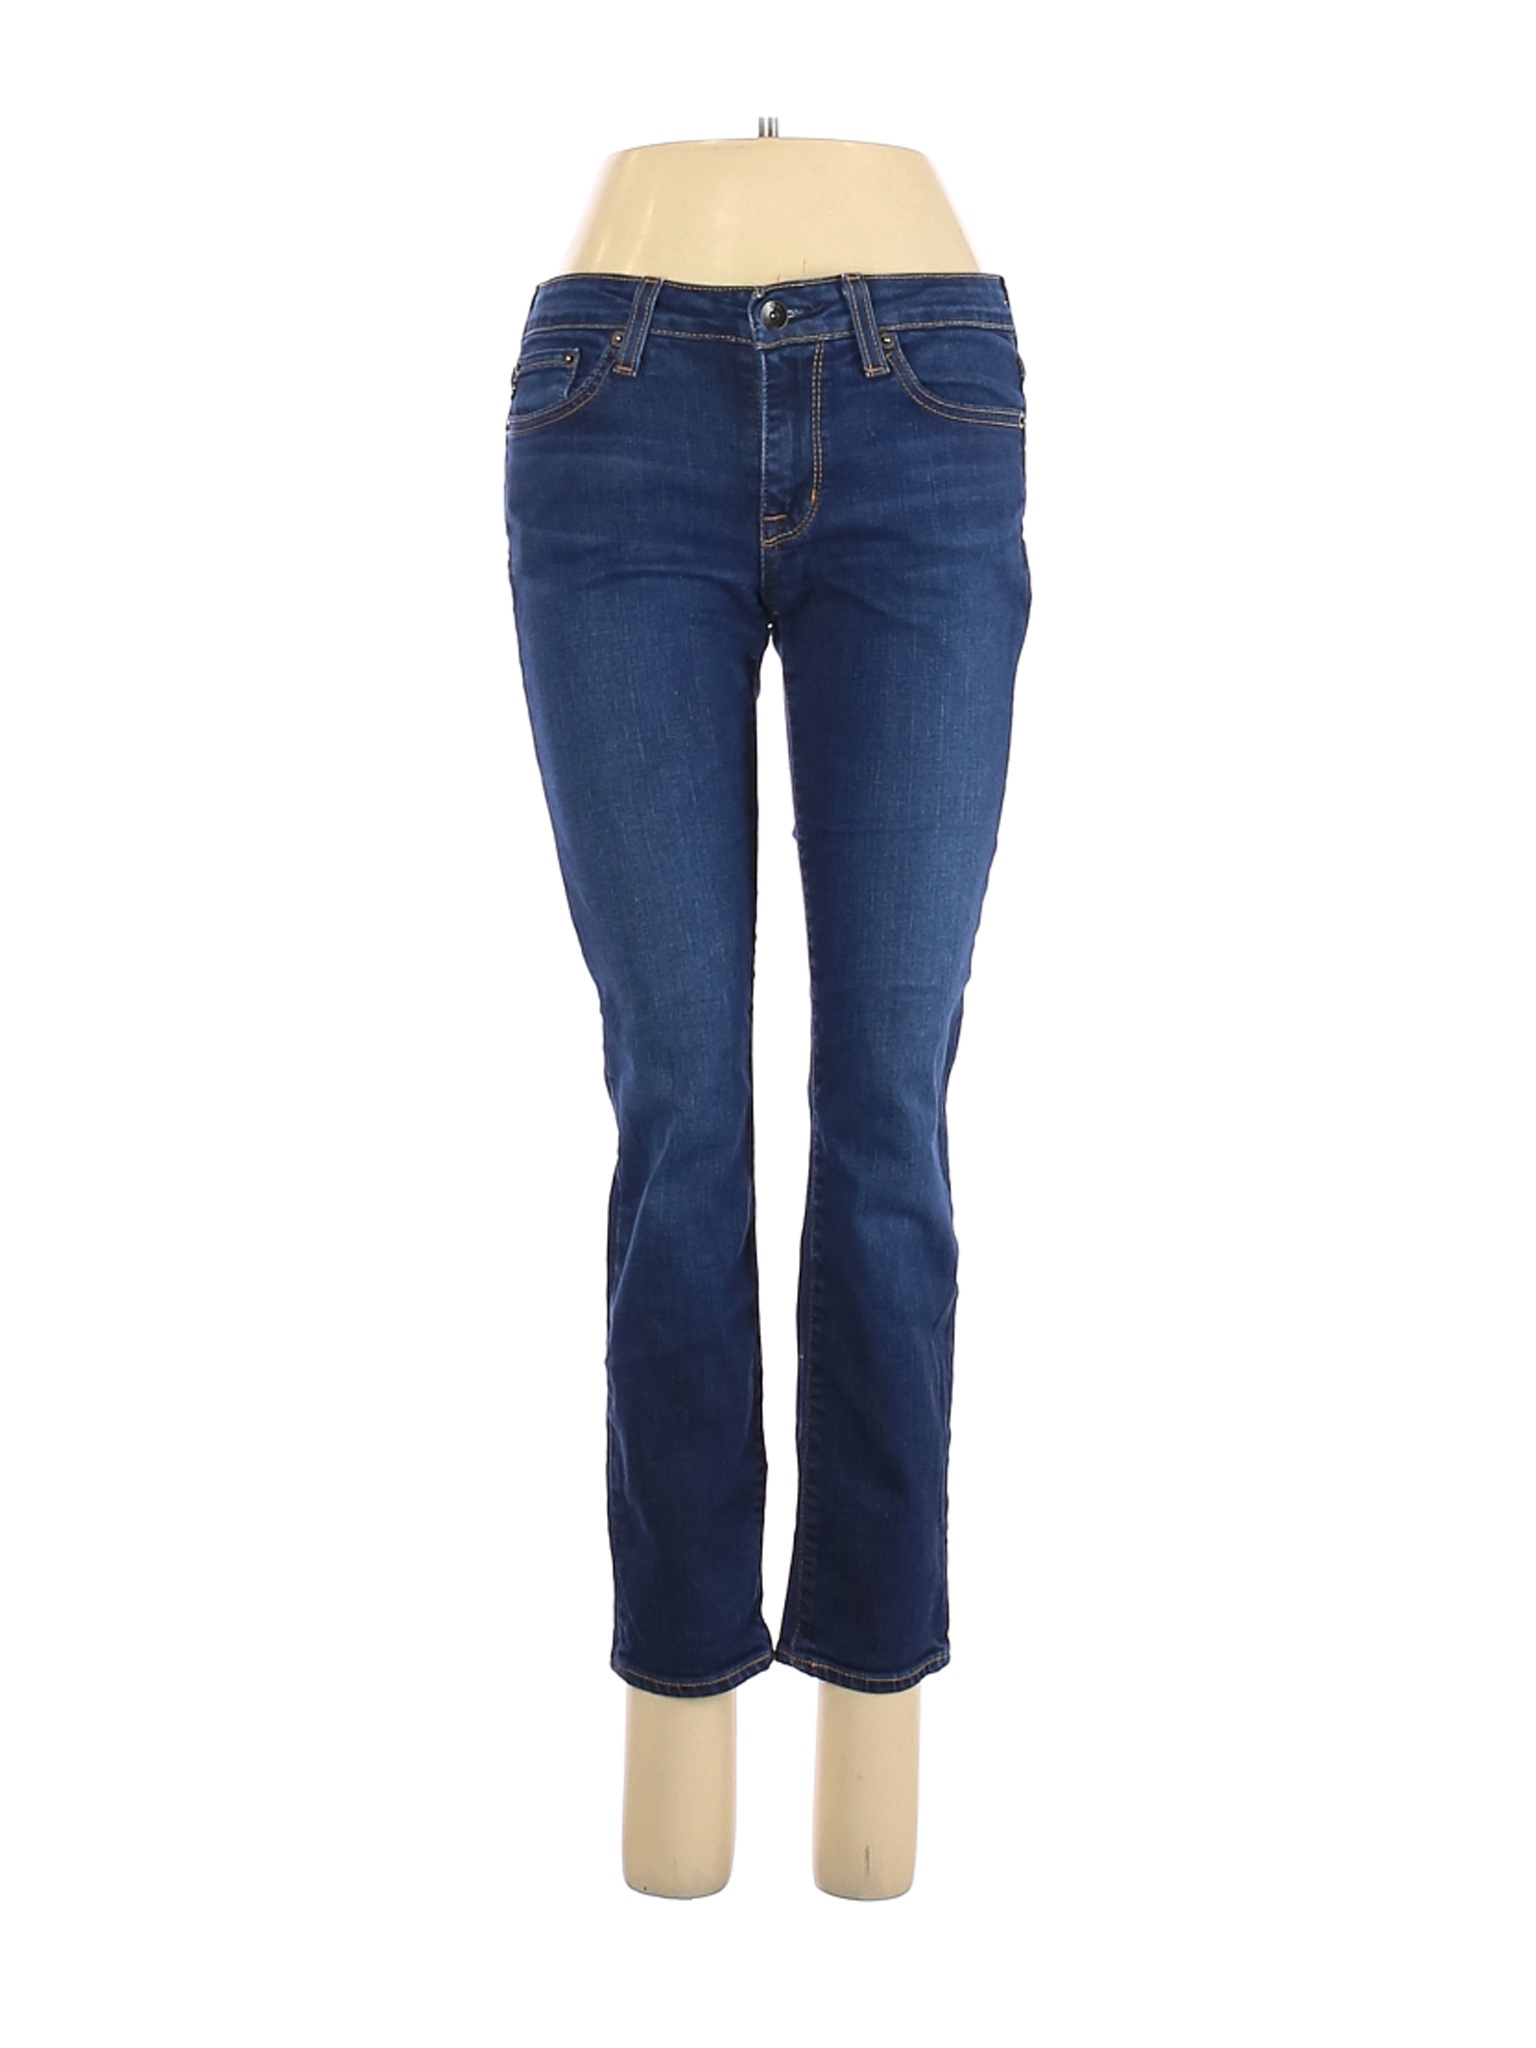 Big Star Women Blue Jeans 26W | eBay